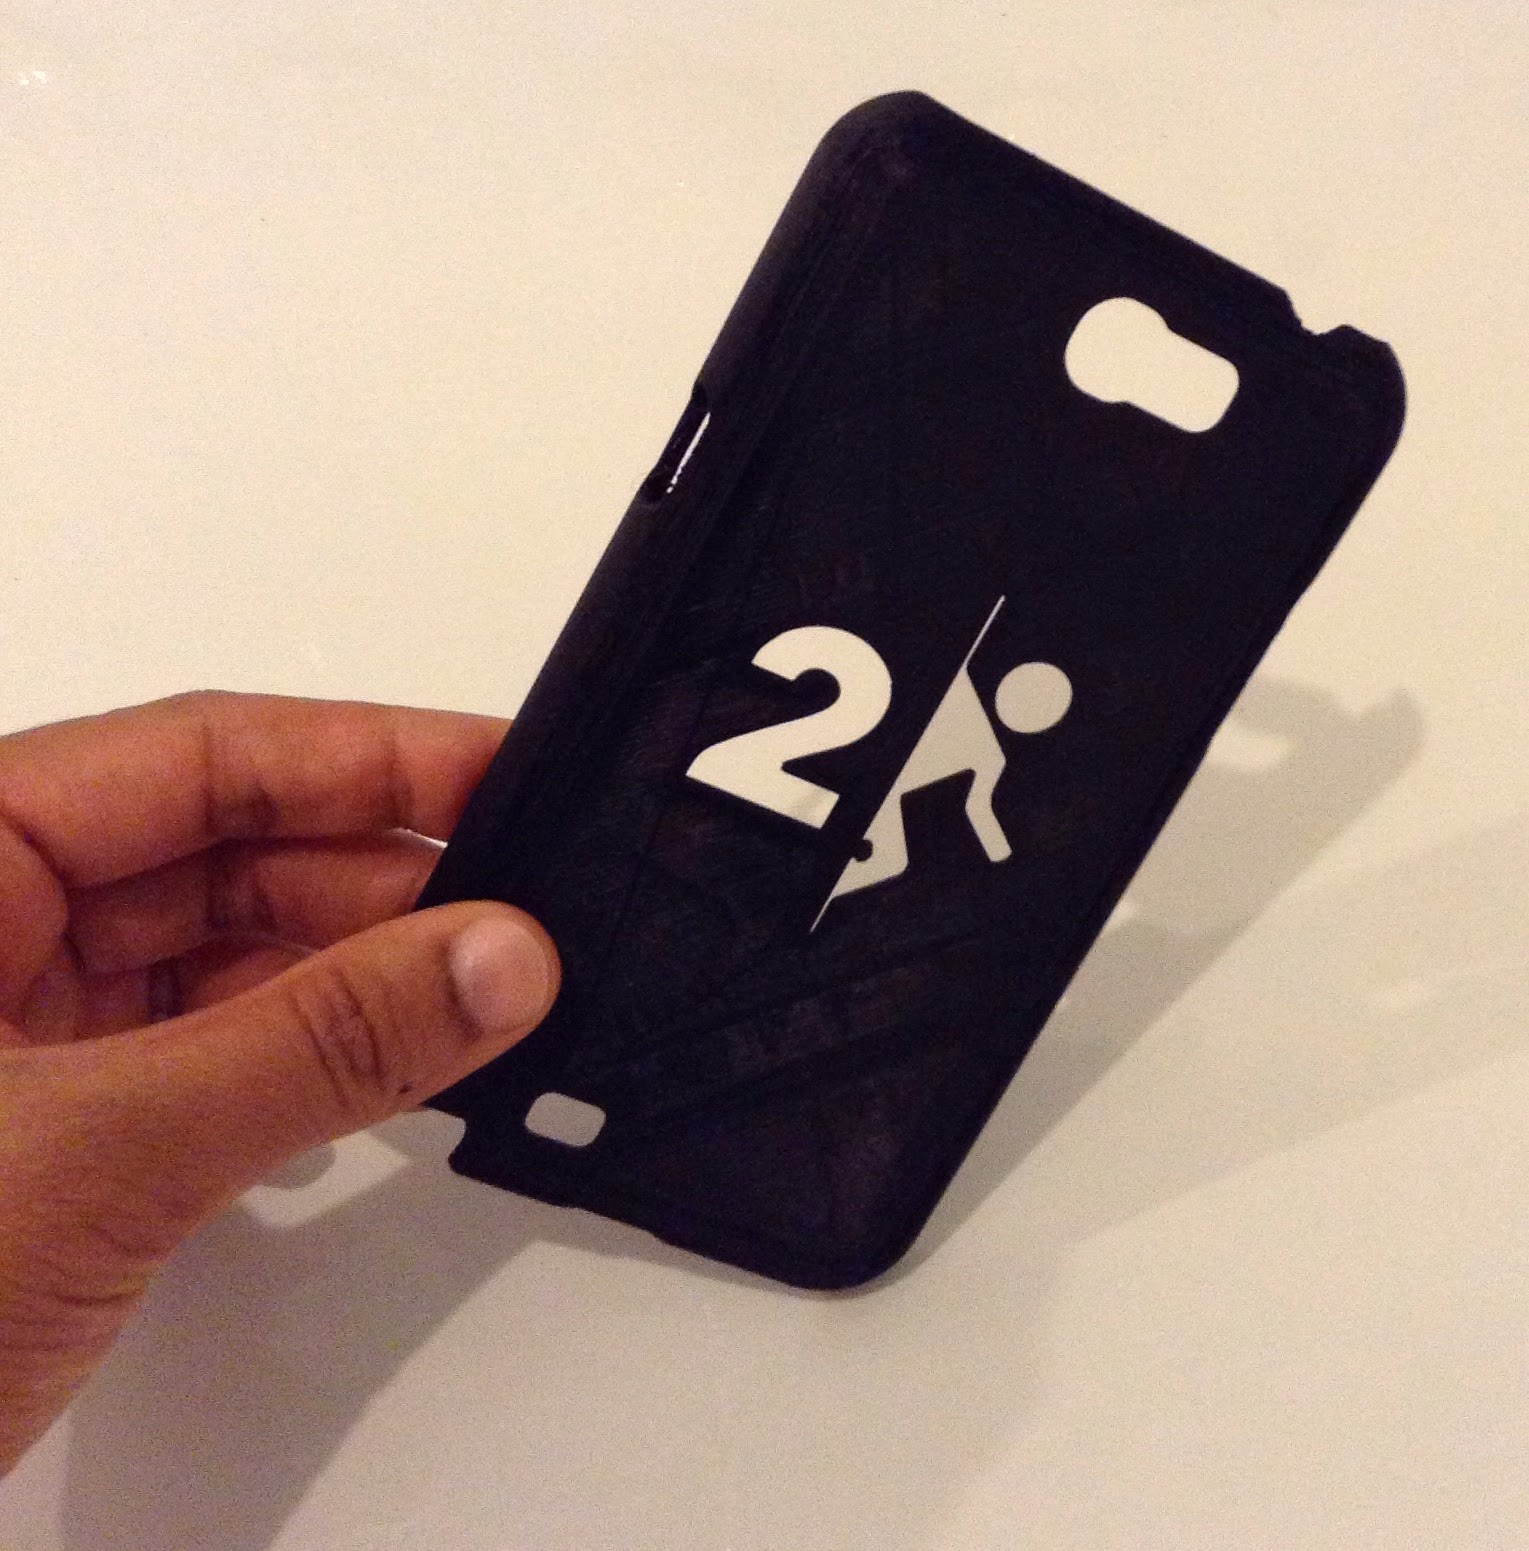 Galaxy Note 2 Case - Portal 2 Stencil